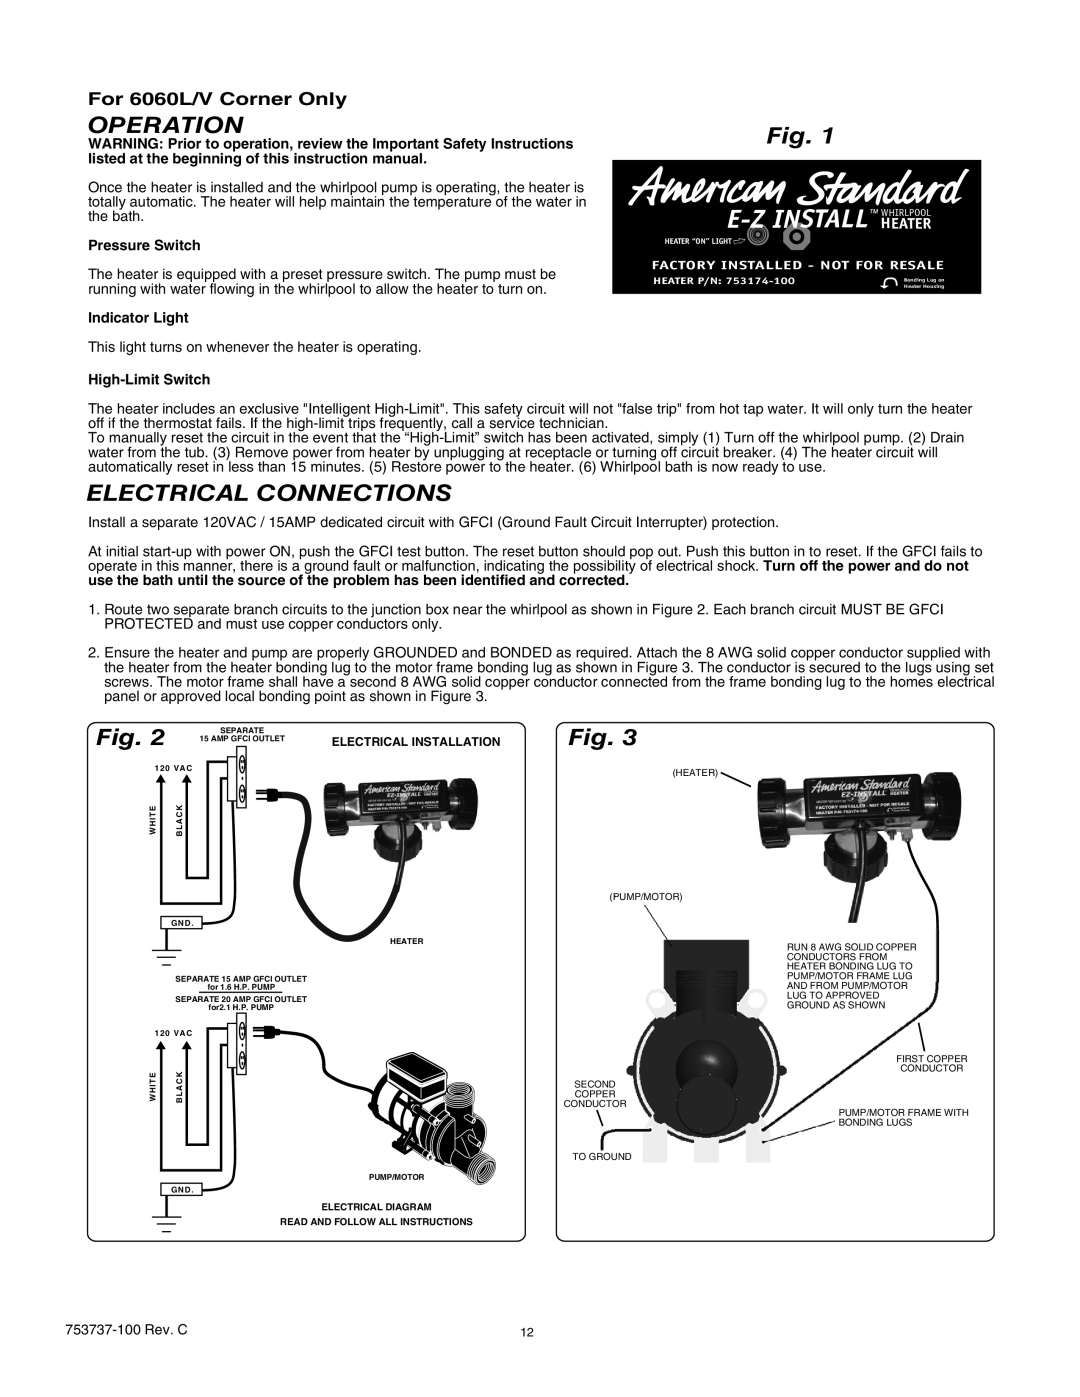 American Standard 6060L/V, 2422L/LA/V/VA E-Z Install, Operation, Electrical Connections, Pressure Switch, Indicator Light 